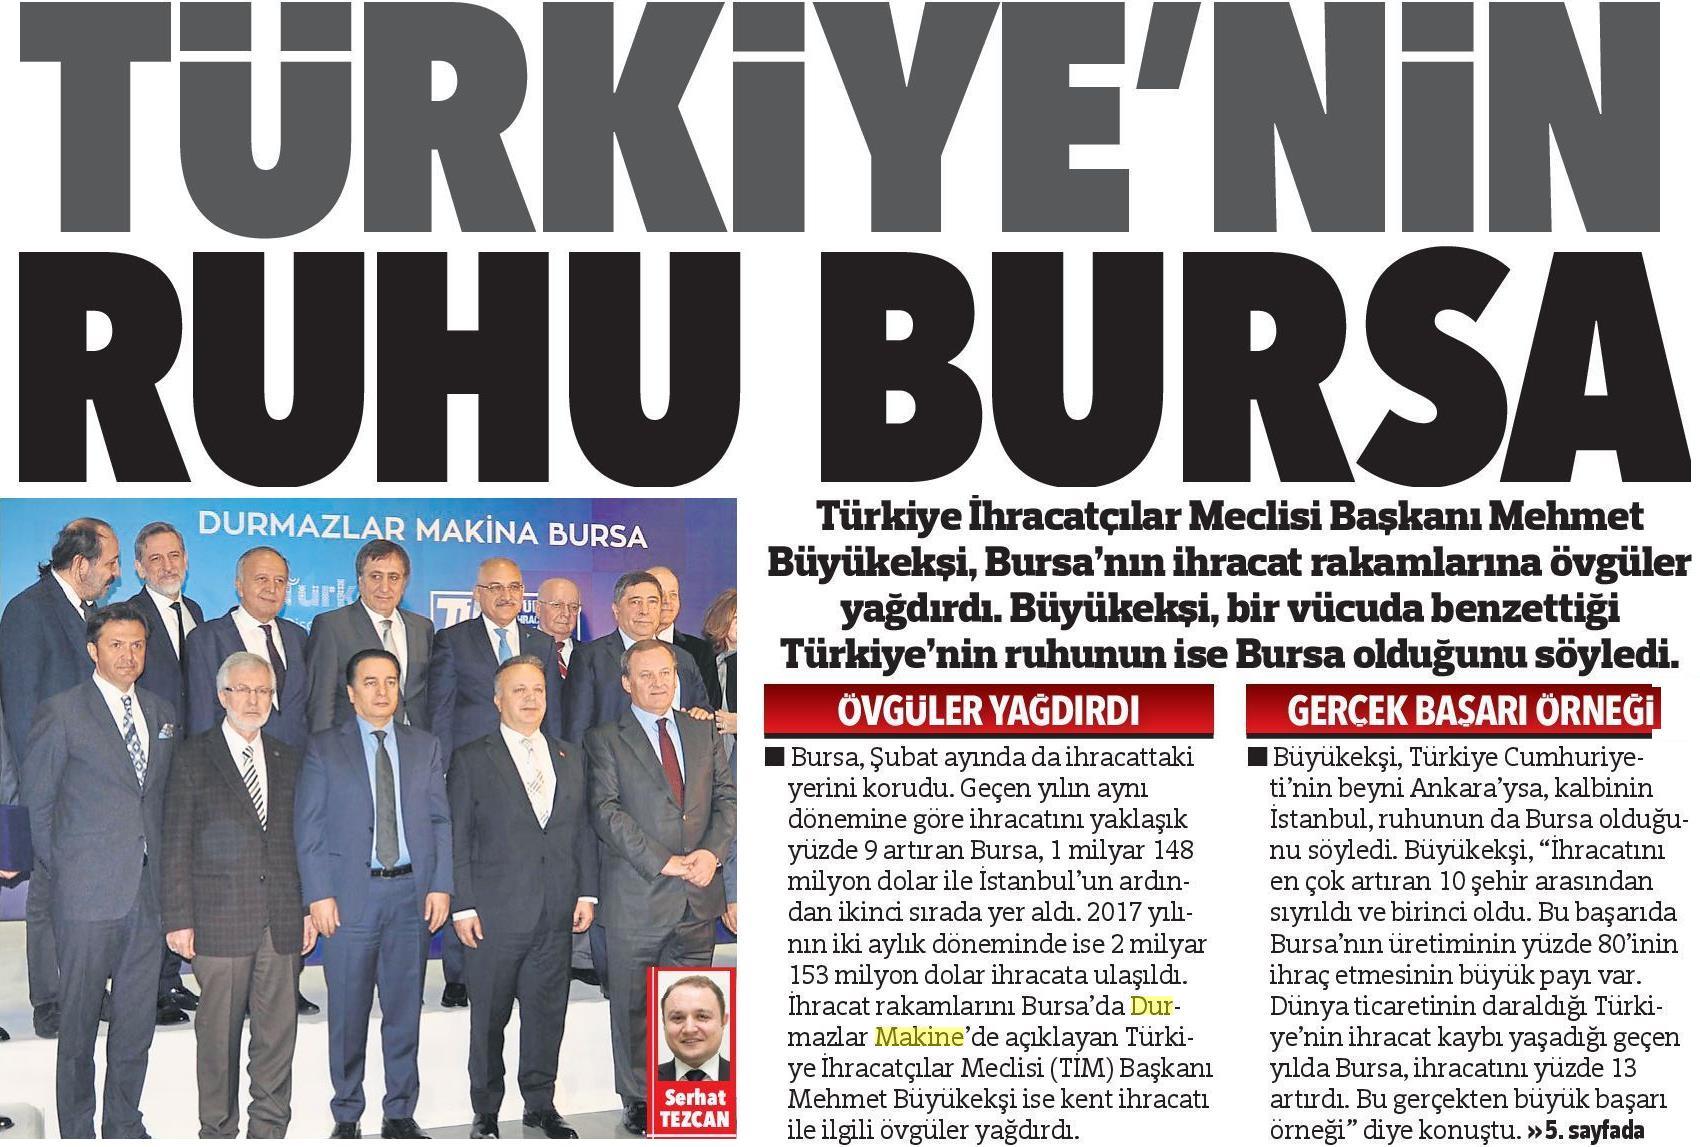 The Spirit of Turkey Bursa